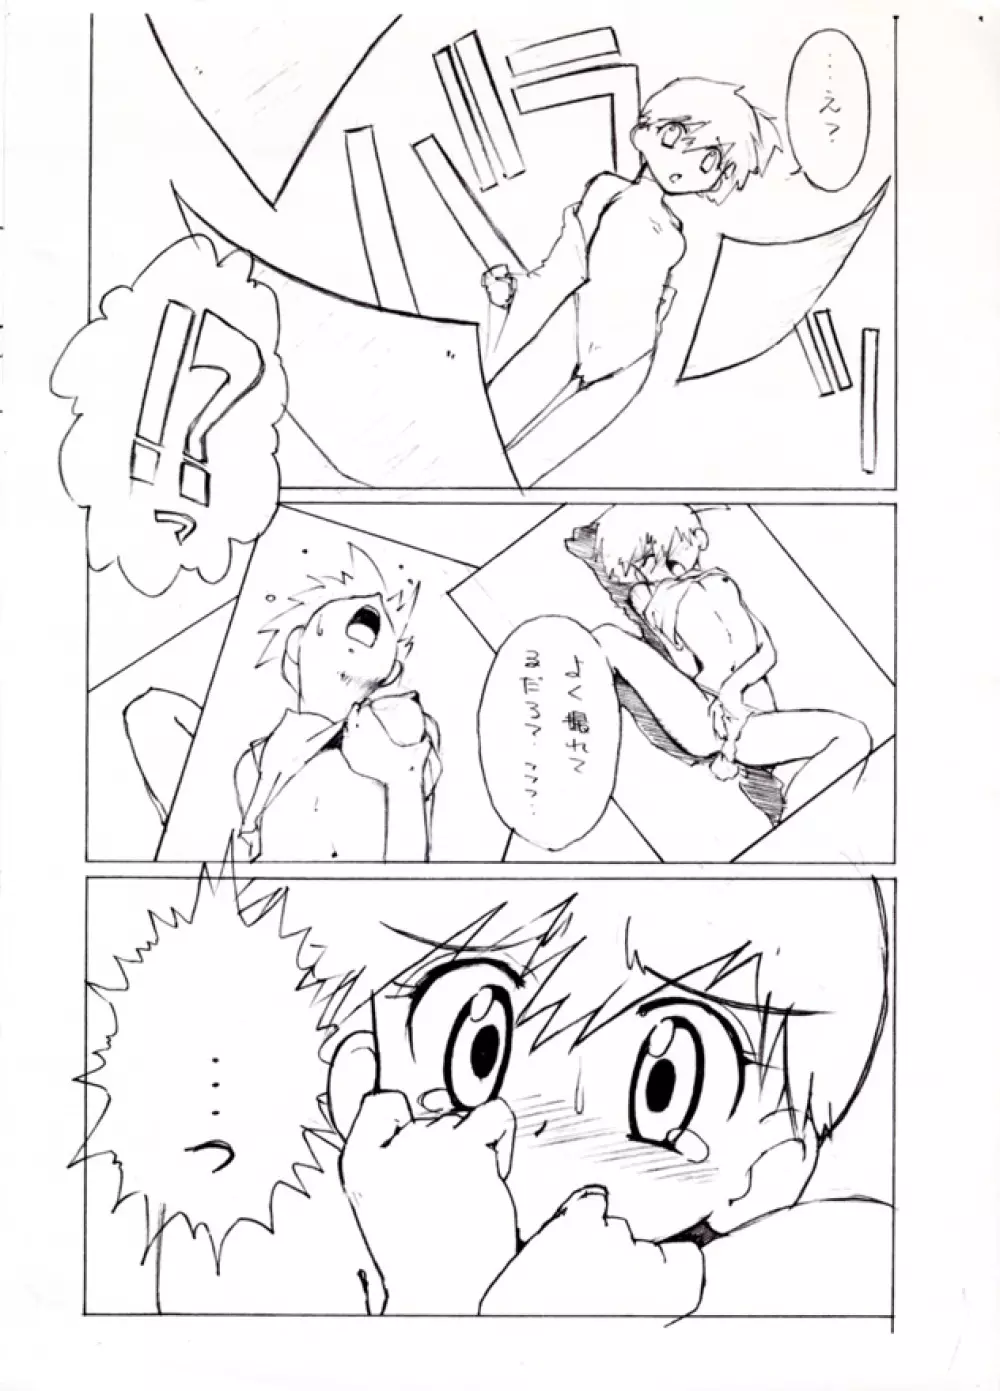 KASUMIX XPLOSION Kasumi Comic part5 - page4